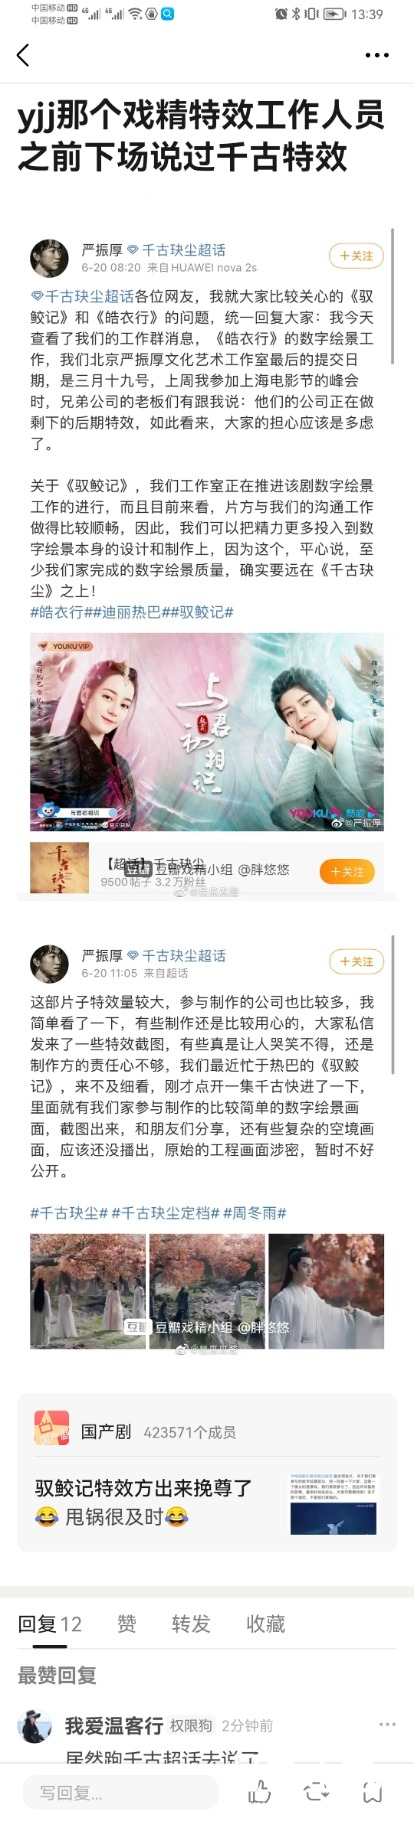 Screenshot_20211020_133944_com.douban.frodo.jpg